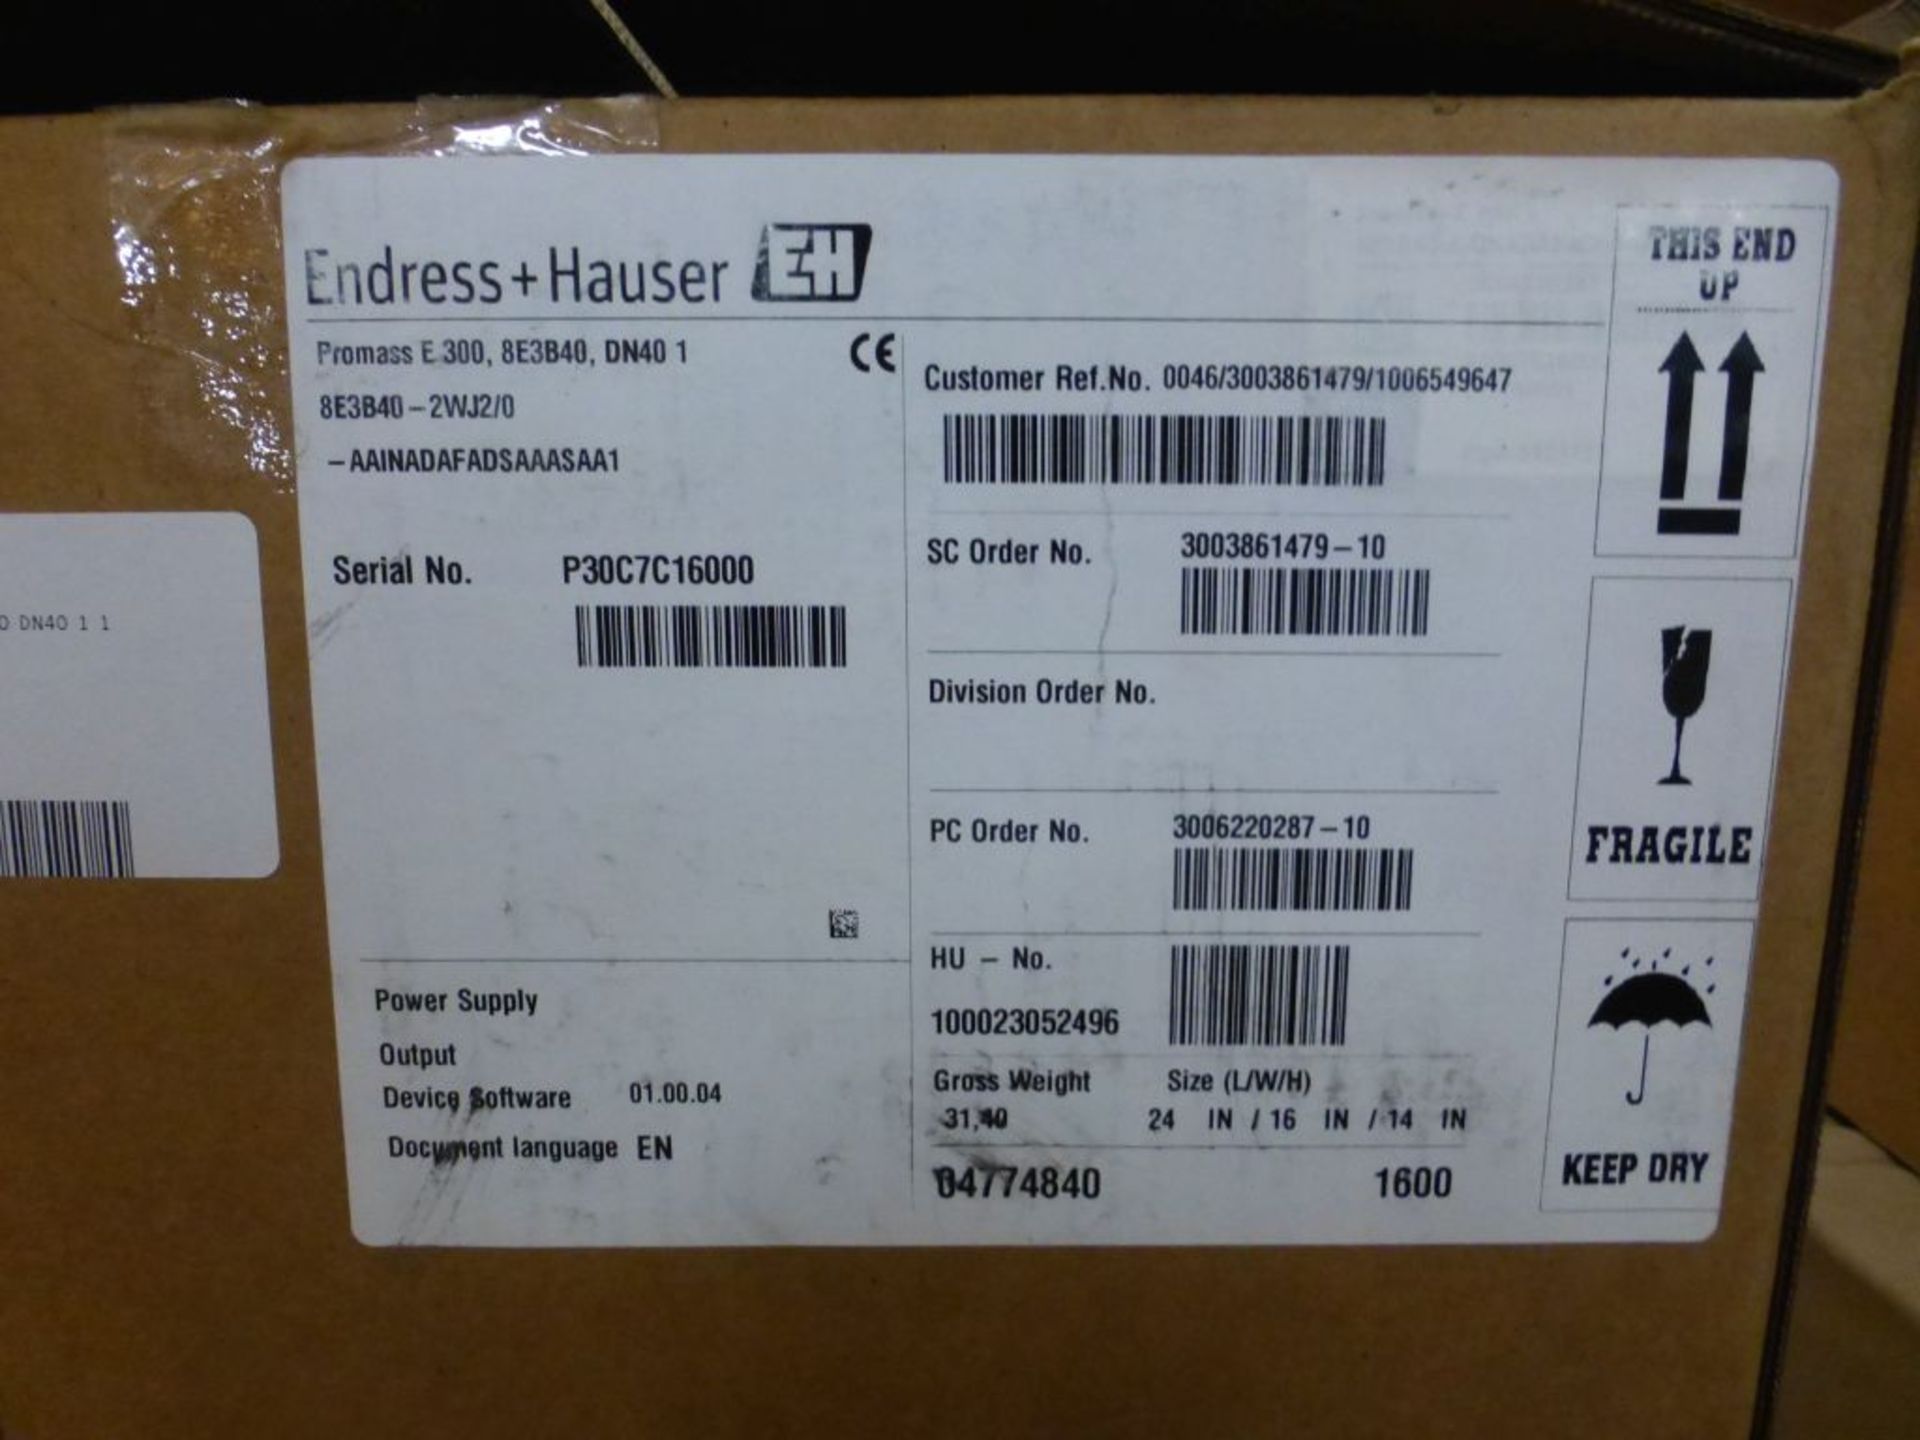 Endress Hauser Promass E300 - Model No. 8E3B40-2WJ2/0; New Surplus; Tag: 221990 - Image 3 of 6